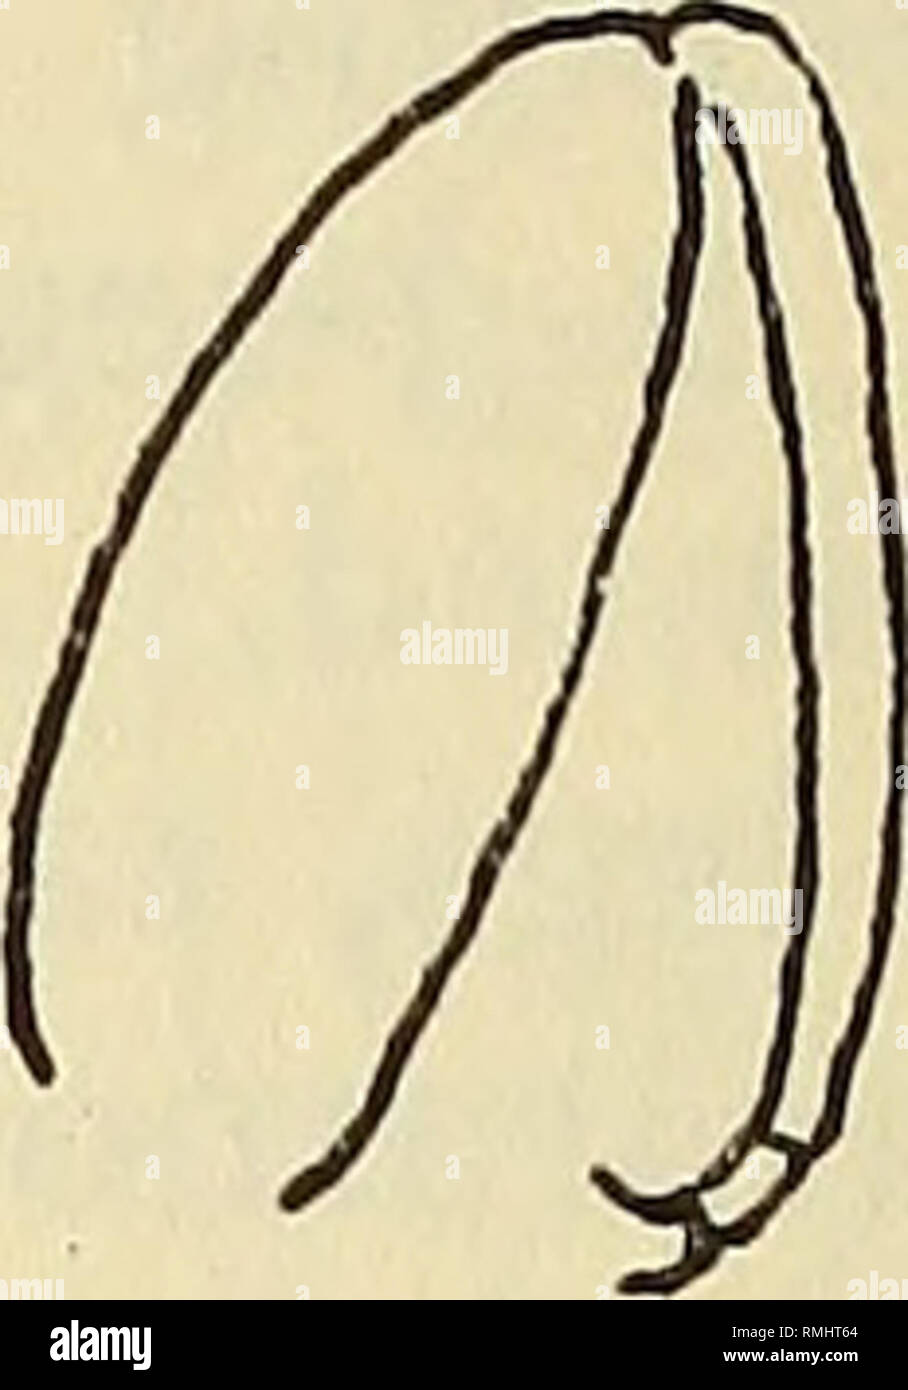 . Annals of the South African Museum = Annale van die Suid-Afrikaanse Museum. Natural history. U Fig. 20. Nemesis pallida Wilson, a, $, spermatophore shown on left, base of ovisac on right side; b, $. Hatschekia acuta Brnrd. c, £, with ventral view of abdomen; d, antenna 2; e, maxilliped. Gen. Hatschekia Poche 1902. Poche, £ool. Anz., xxvi, p. 16. 1913. Wilson, Proc. U.S. Nat. Mus., xliv, p. 239. 1922. id., loc. cit., p. 81 (key to species). 1932. id., loc. cit., p. 476. 1939. Yamaguti, Paras. Copep. Japan, pt. 5, Caligoida 3, vol. Jubil. Prof. Toshida, II, pp. 458-69. 1951. Pearse, Proc. U. Stock Photo